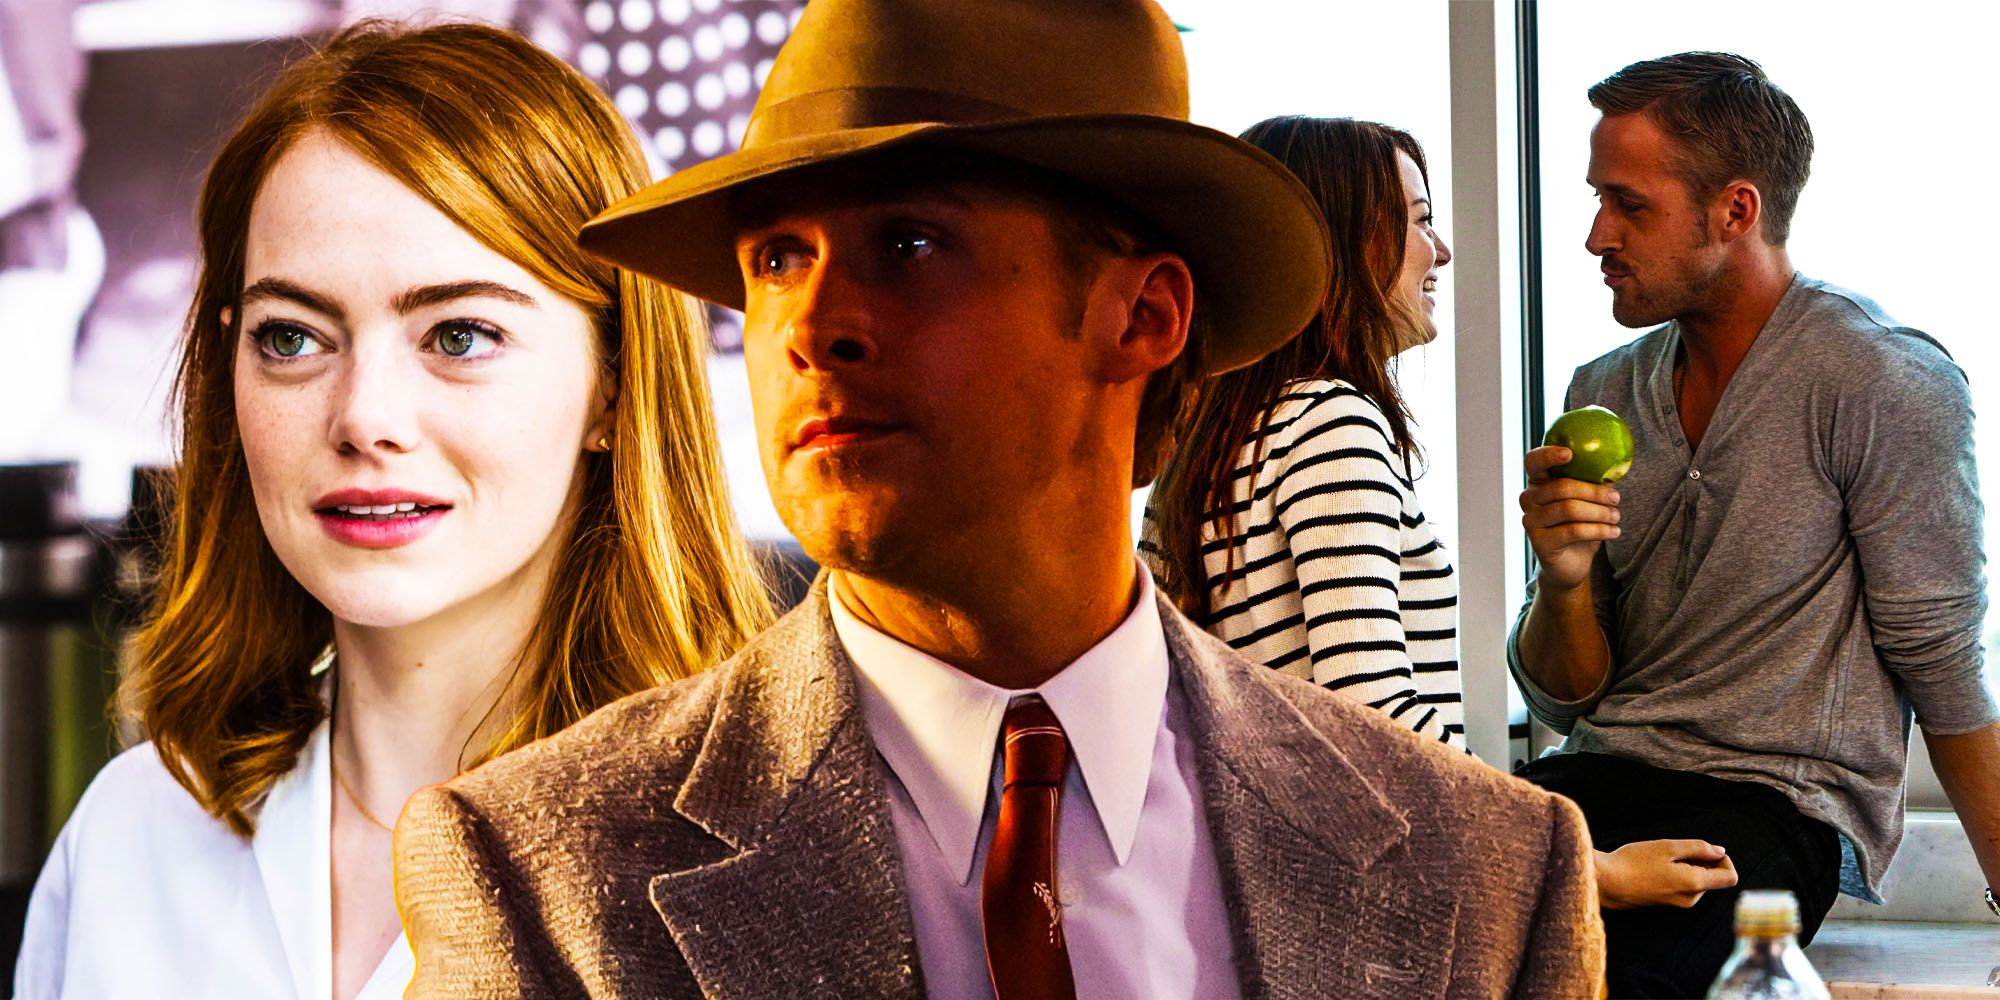 Crazy Stupid Love': Ryan Gosling, Emma Stone's movie made